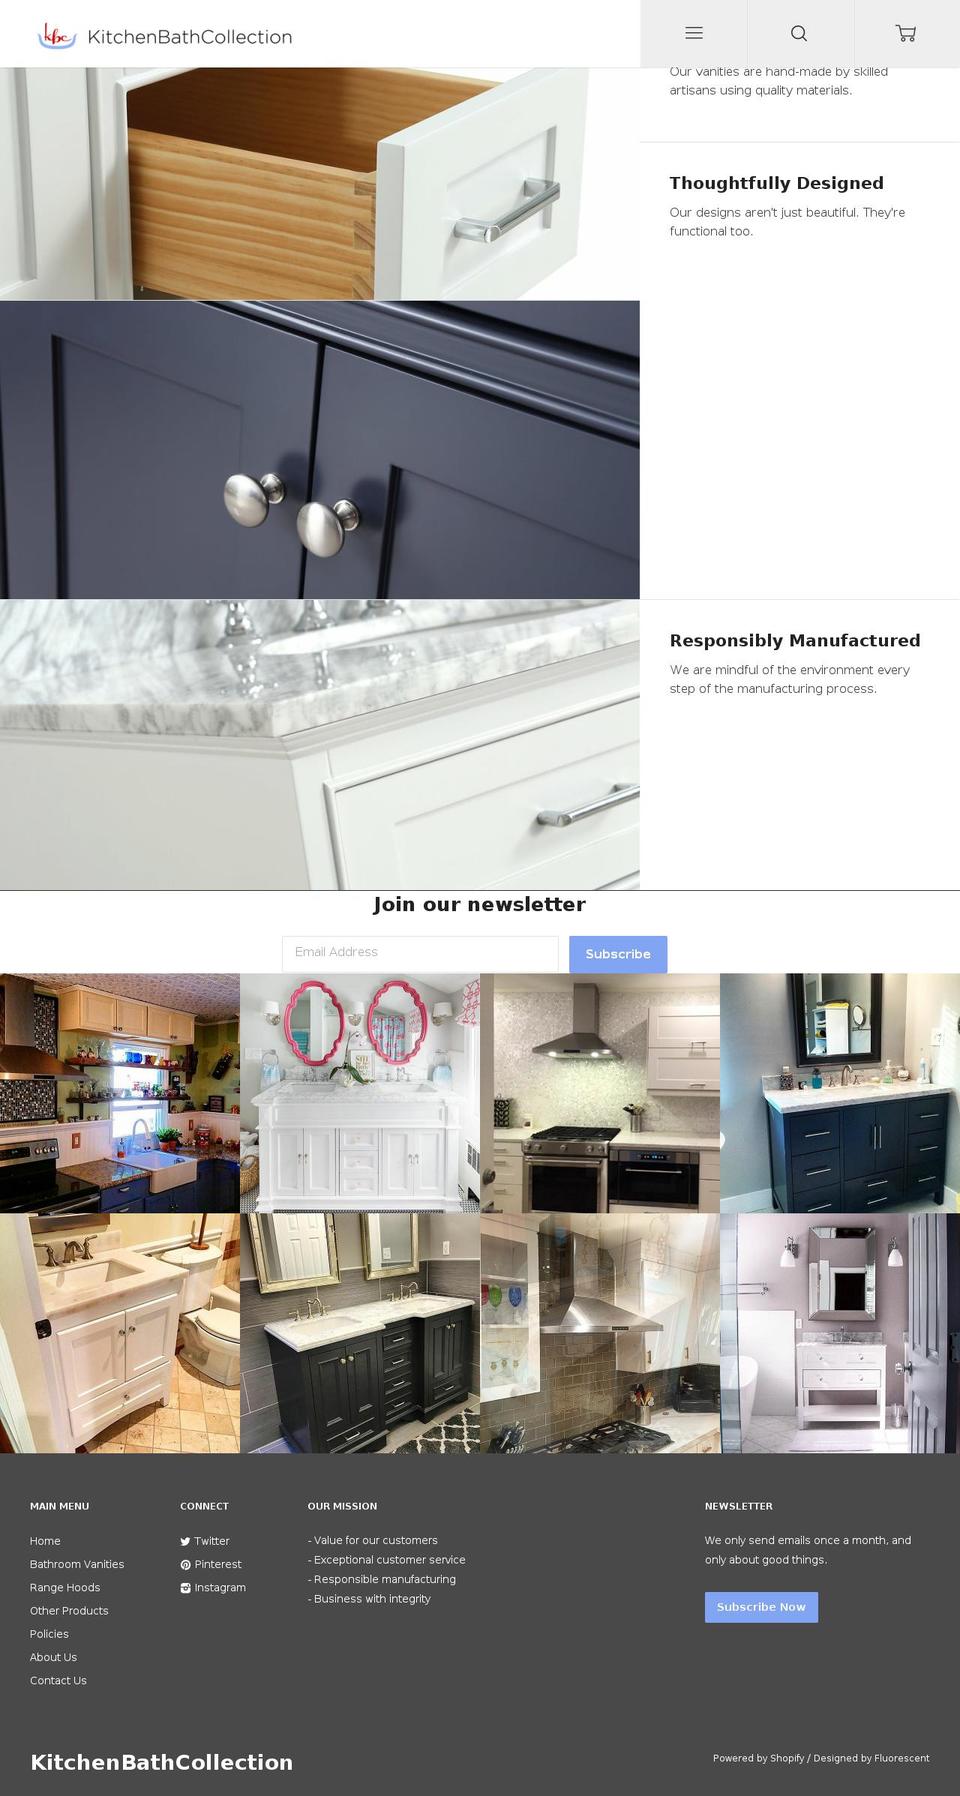 kitchenbathcollection.com shopify website screenshot